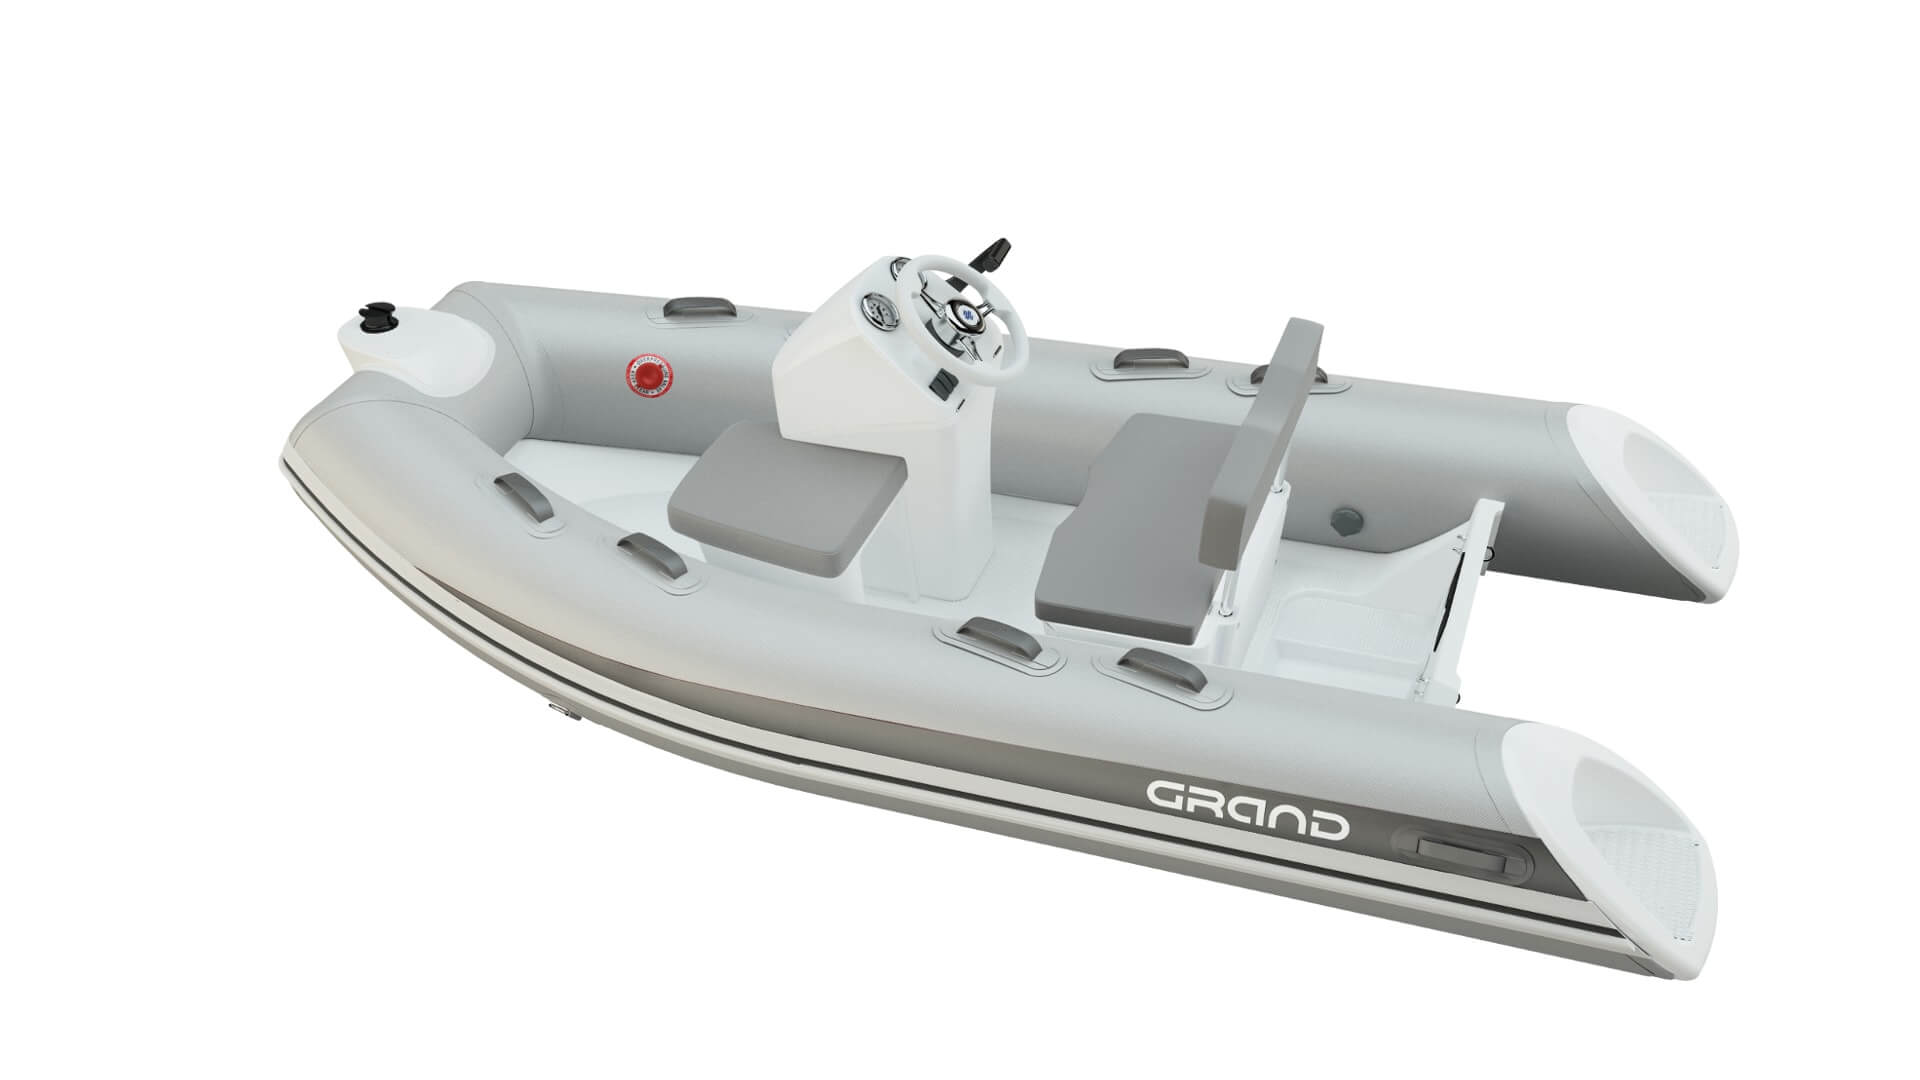 GRAND Silver Line S300L, GRAND S300L, S3300NL, GRAND Silver Line S300L, GRAND Silver Line S300L, GRAND S300L, GRAND S300L, S300L, S300L, Надувная лодка GRAND, Надувная лодка ГРАНД, Надувная лодка с жестким дном, RIB, Rigid Inflatable Boats